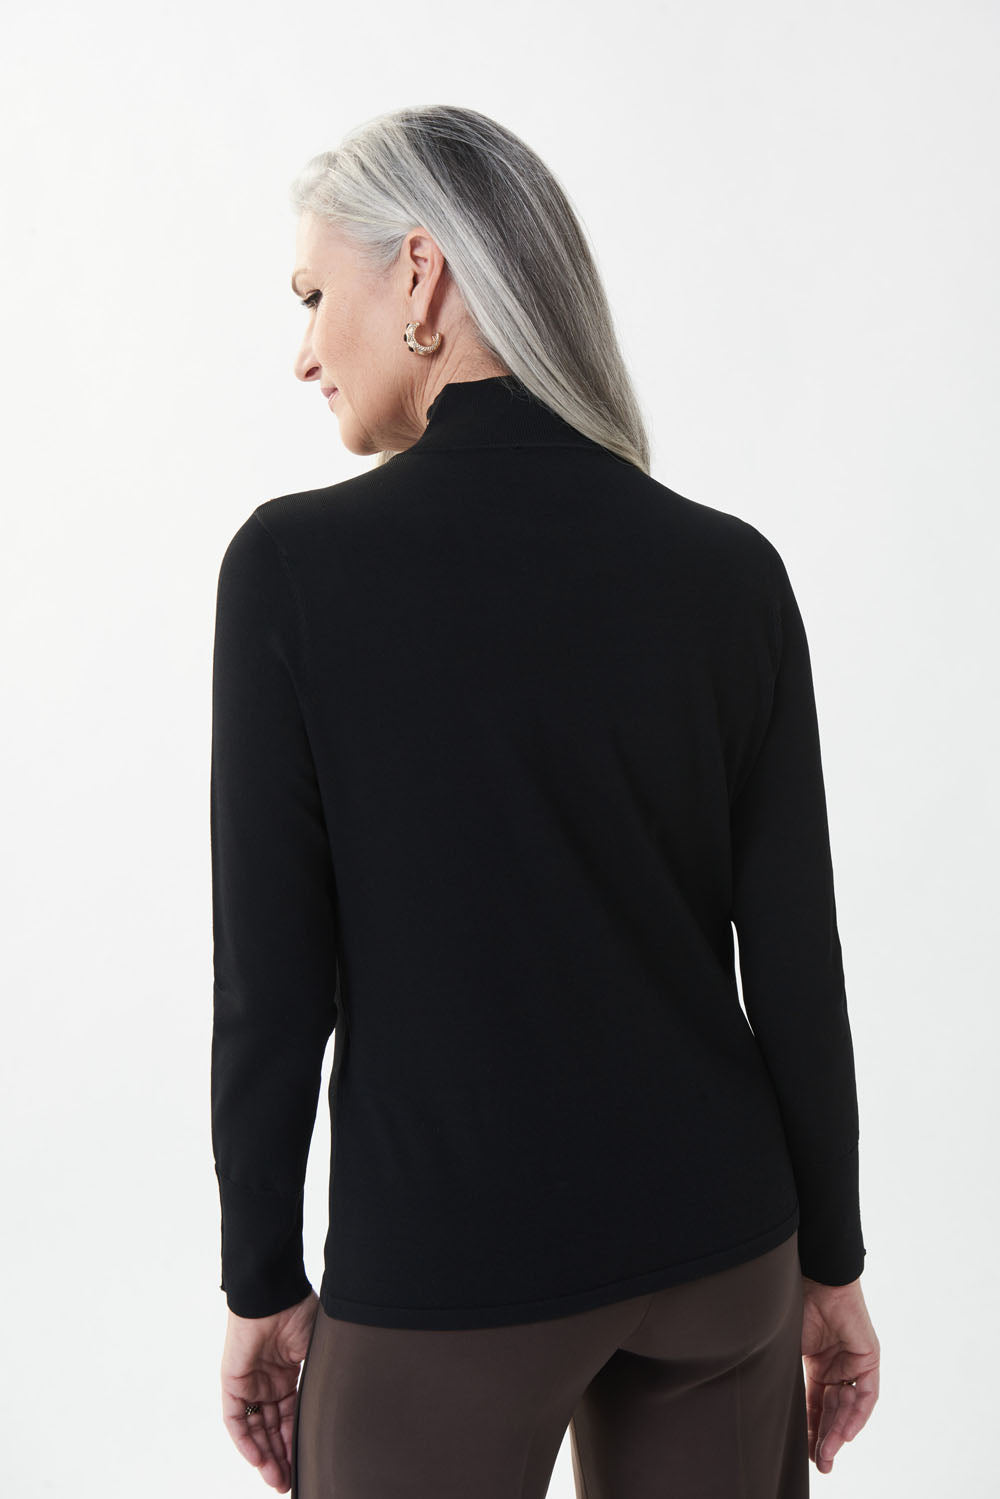 Joseph Ribkoff Black Studded Sweater Style 223954